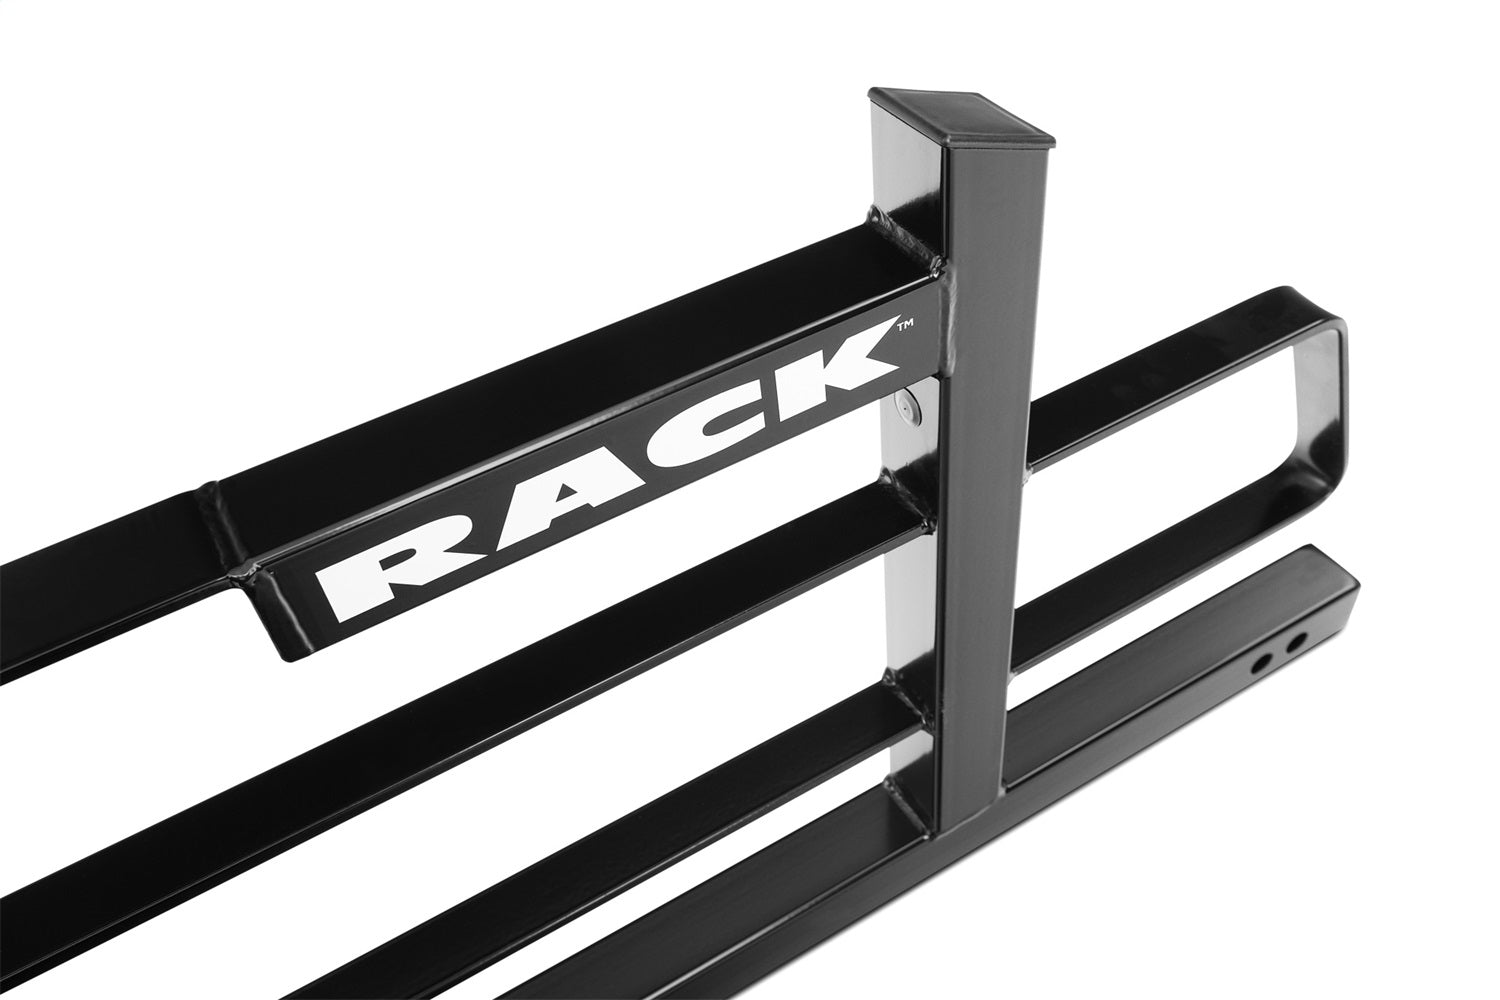 Backrack 15024 Backrack Headache Rack Frame